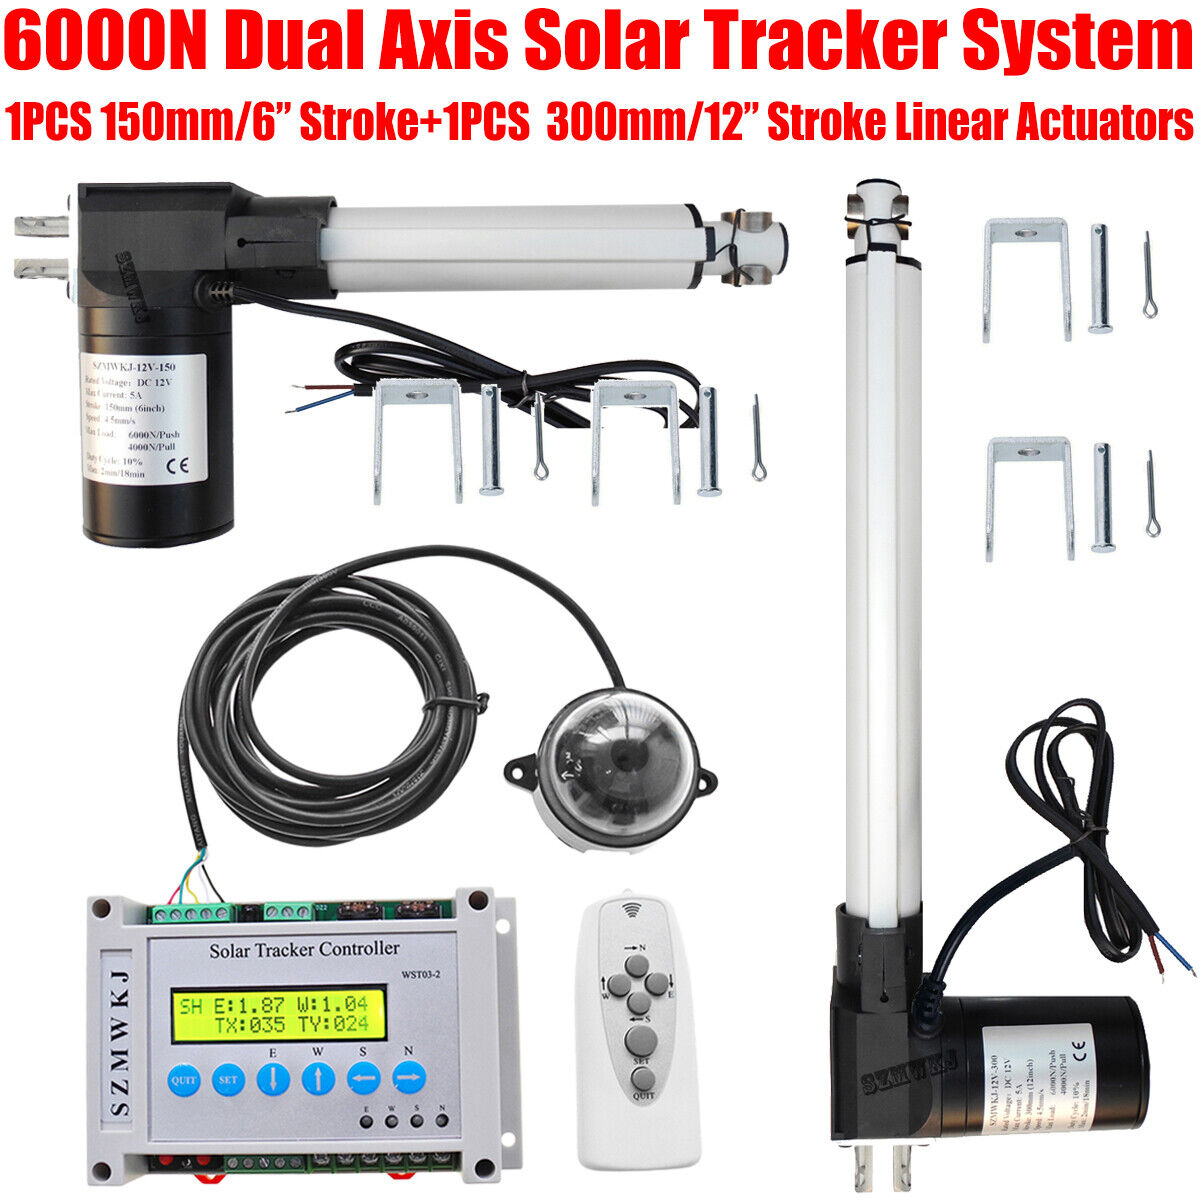 DC 12V 6000N Dual Axis Solar Tracker -Solar Panel Auto Tracking Sun Track System